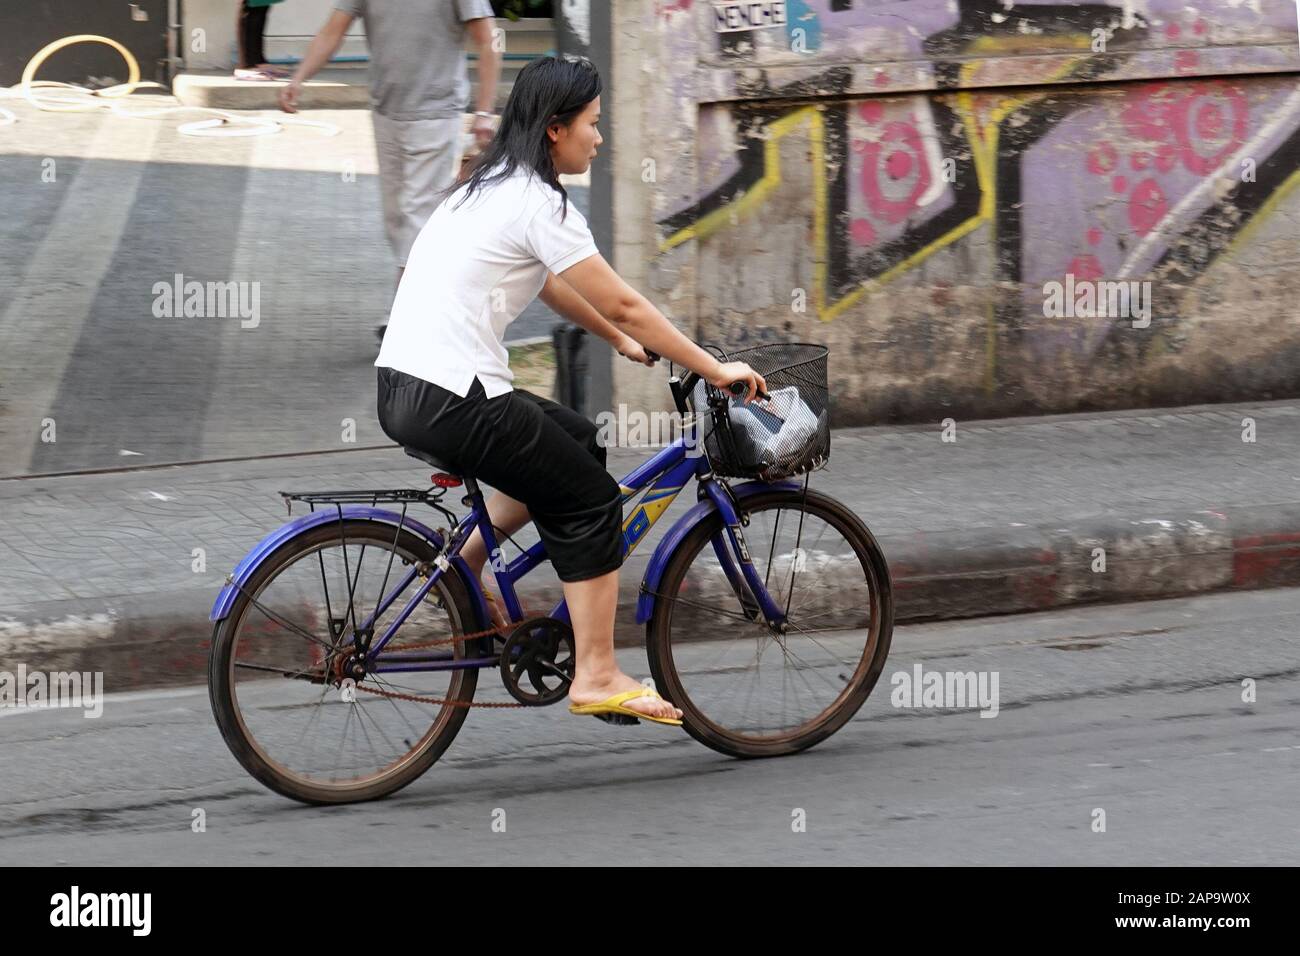 Bangkok, Thailand - December 26, 2019: Woman riding a bicycle on Sukhumvit Soi 4. Stock Photo